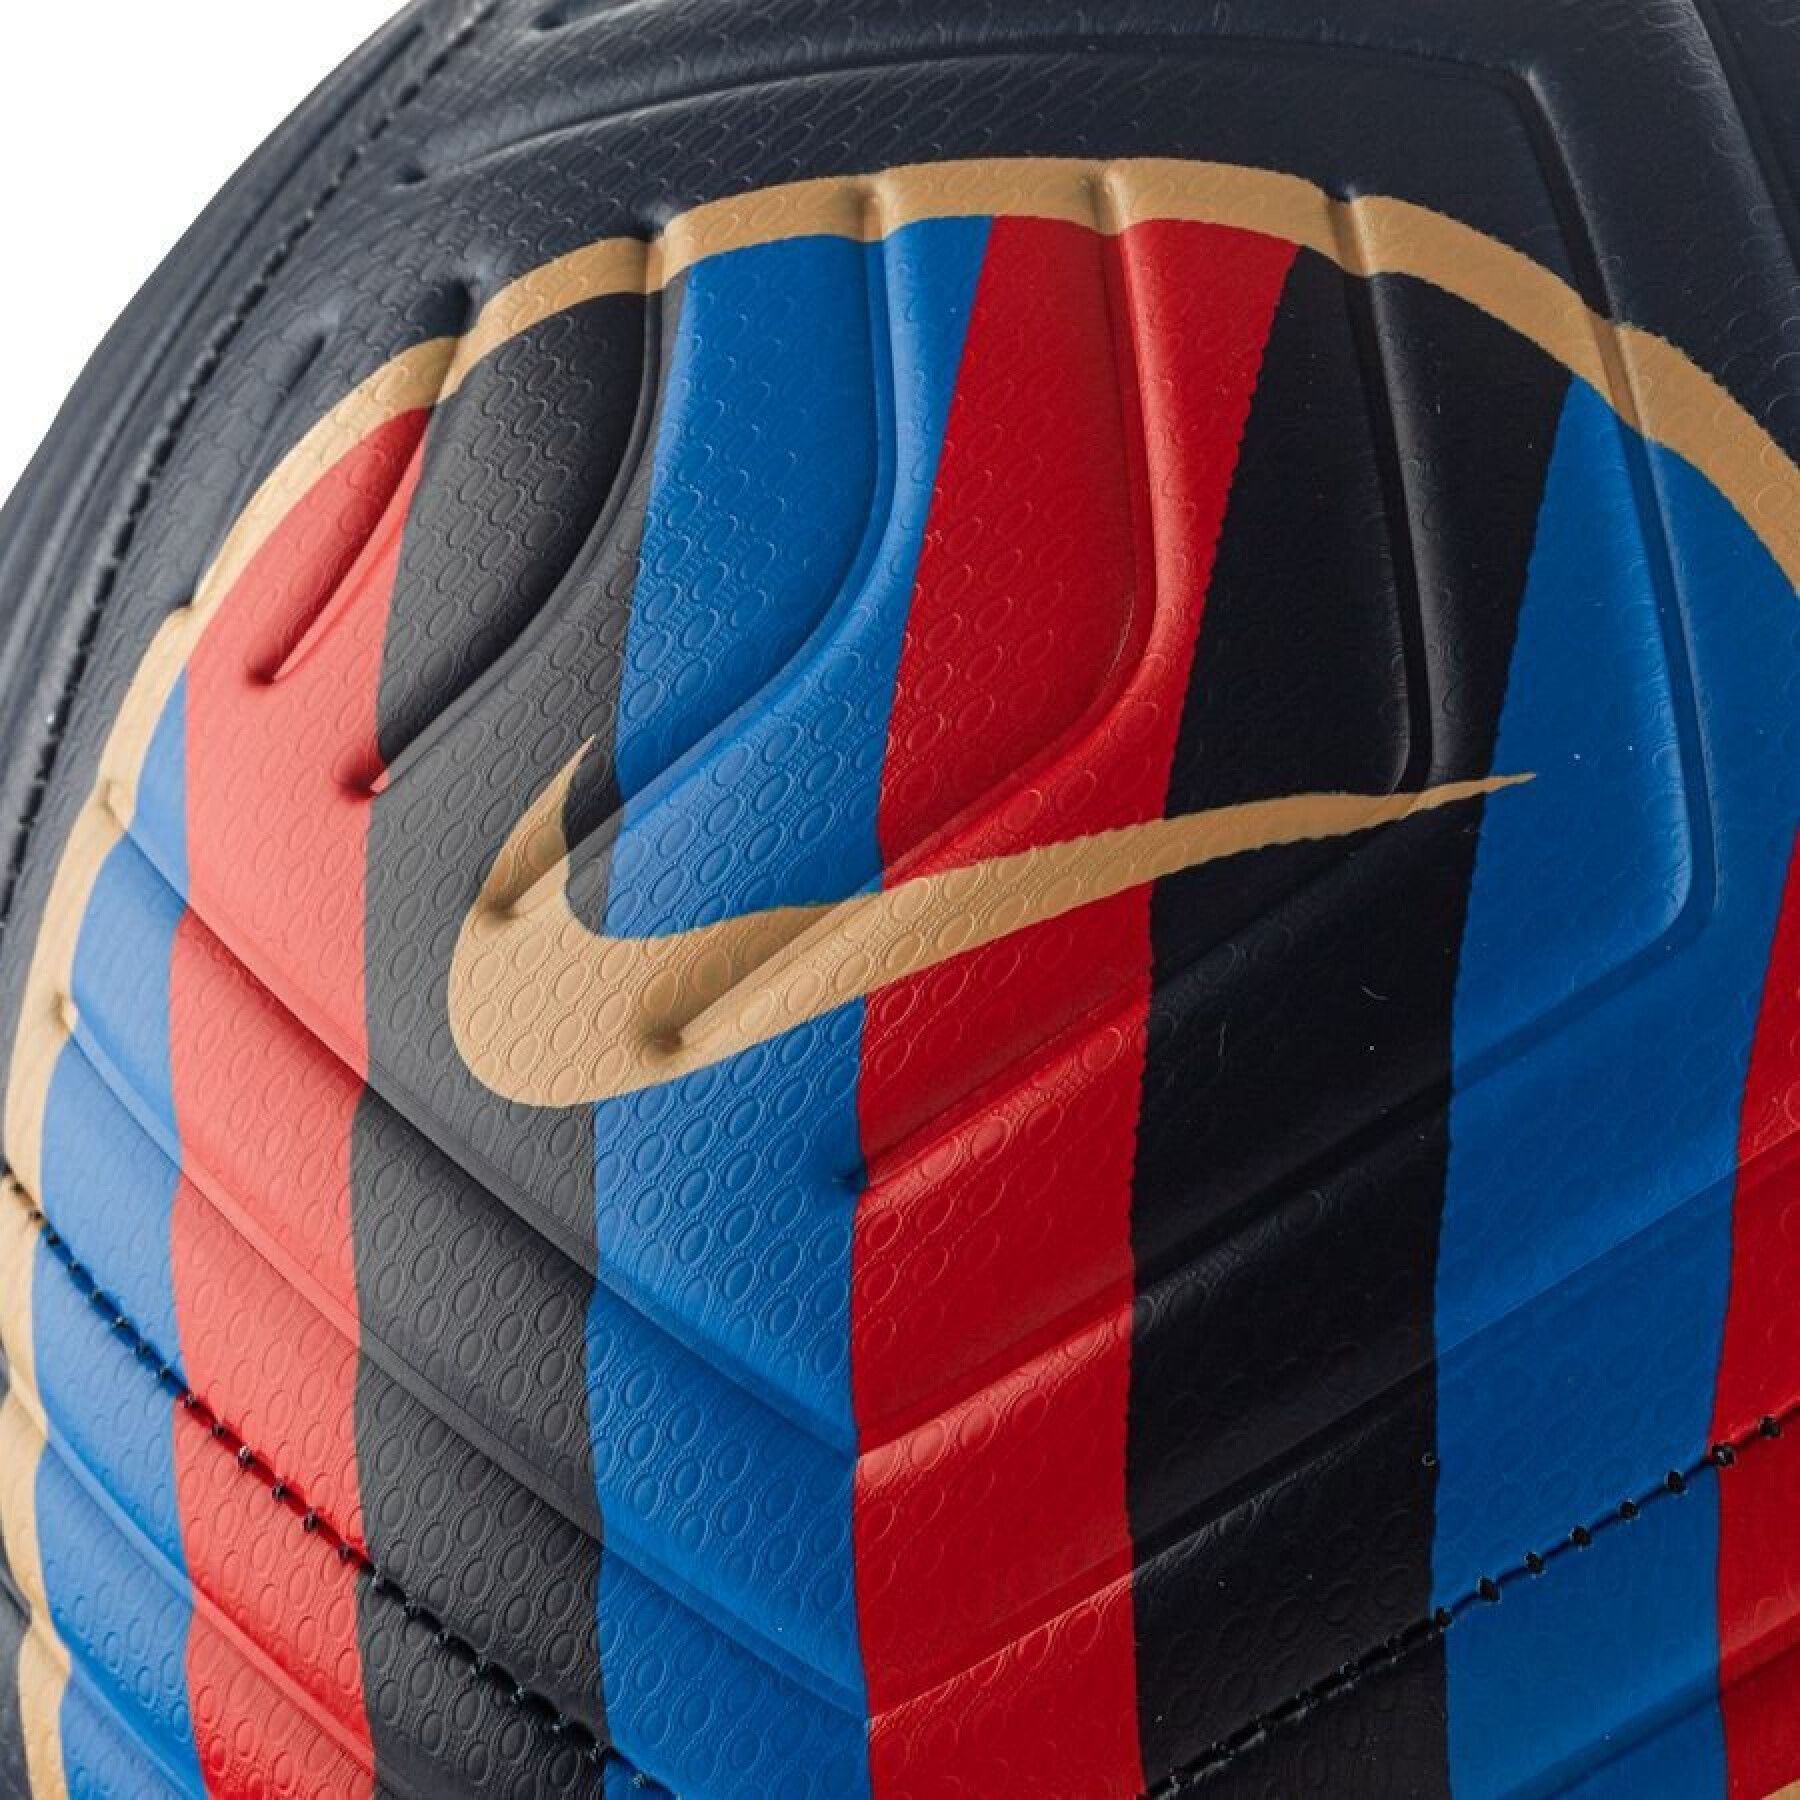 Balon FC Barcelone Strike 2022/23